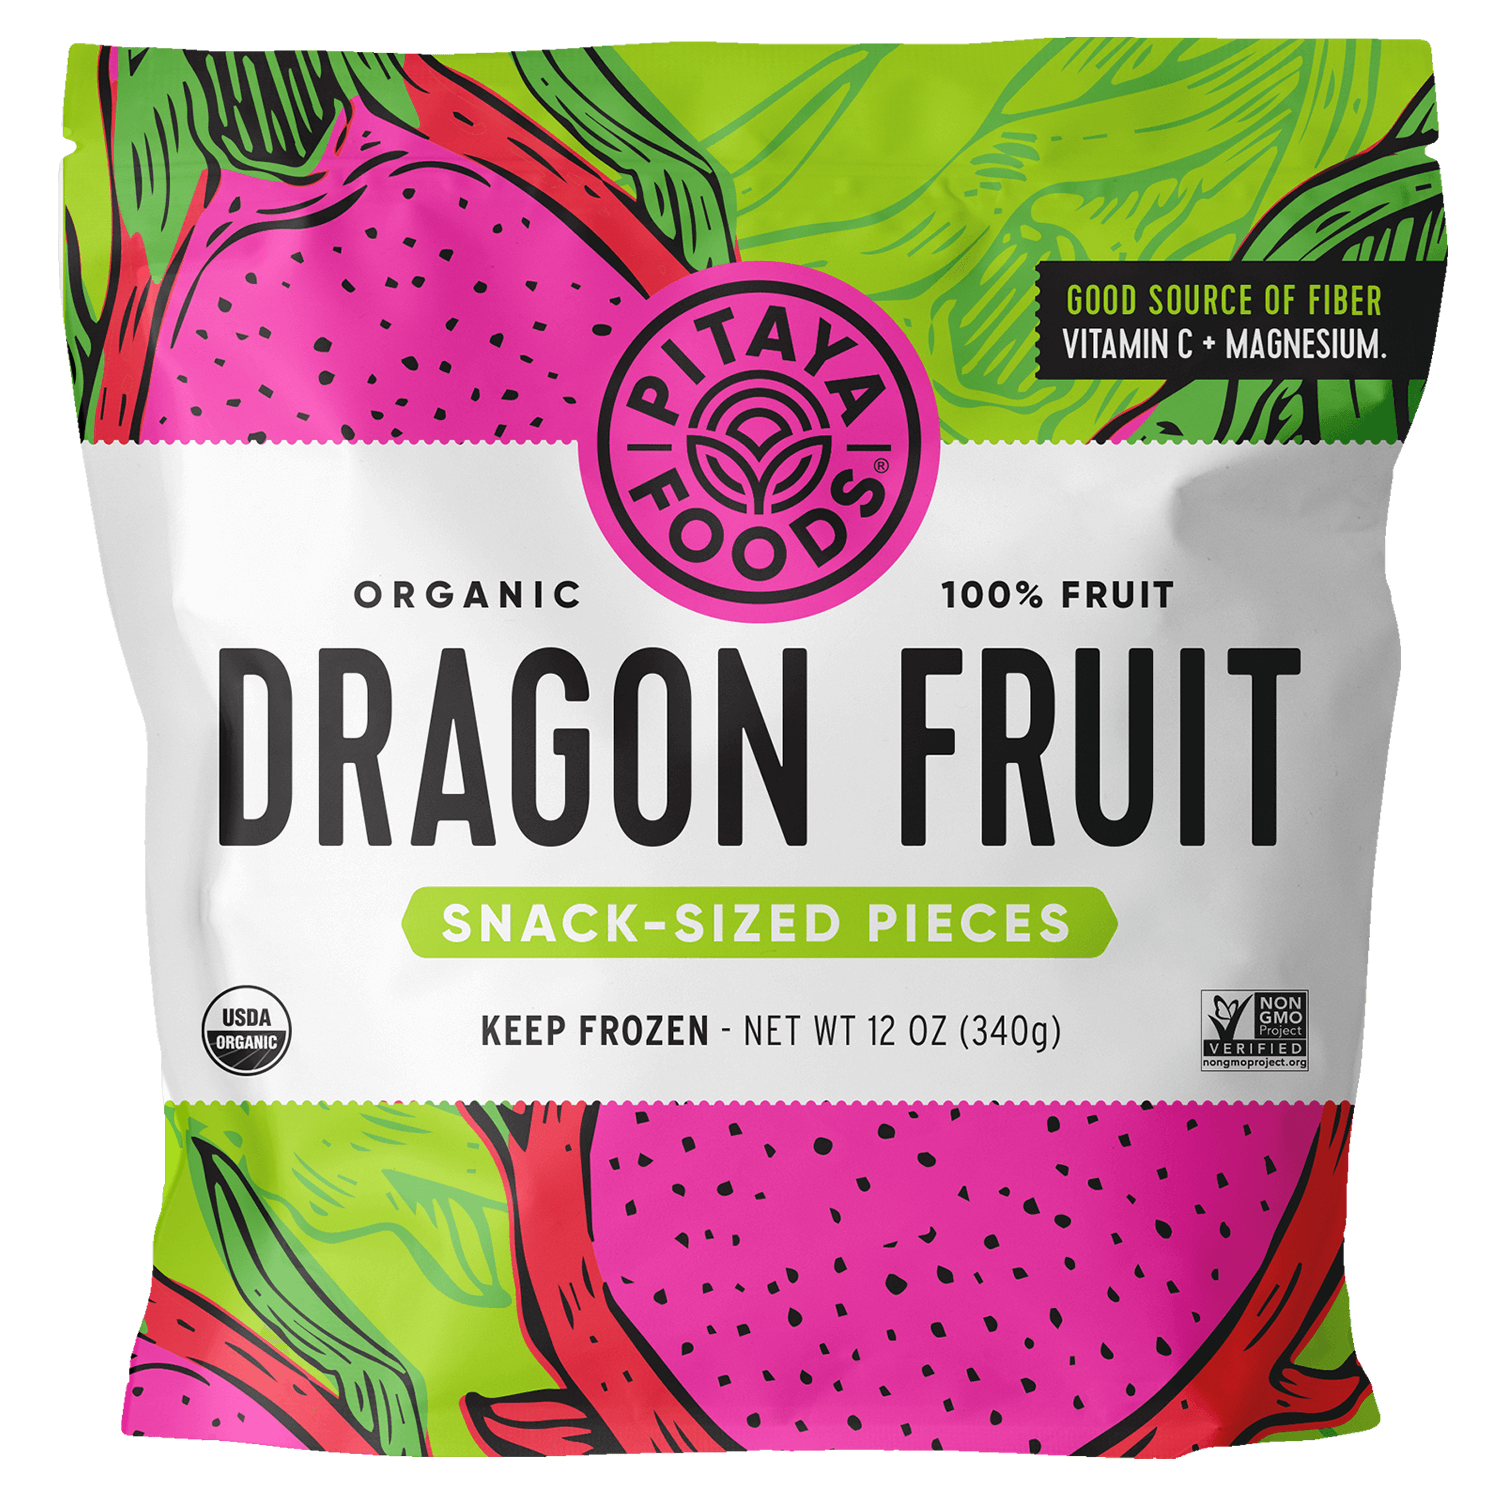 Buy Organic Yellow Dragon Fruit, GMO Free